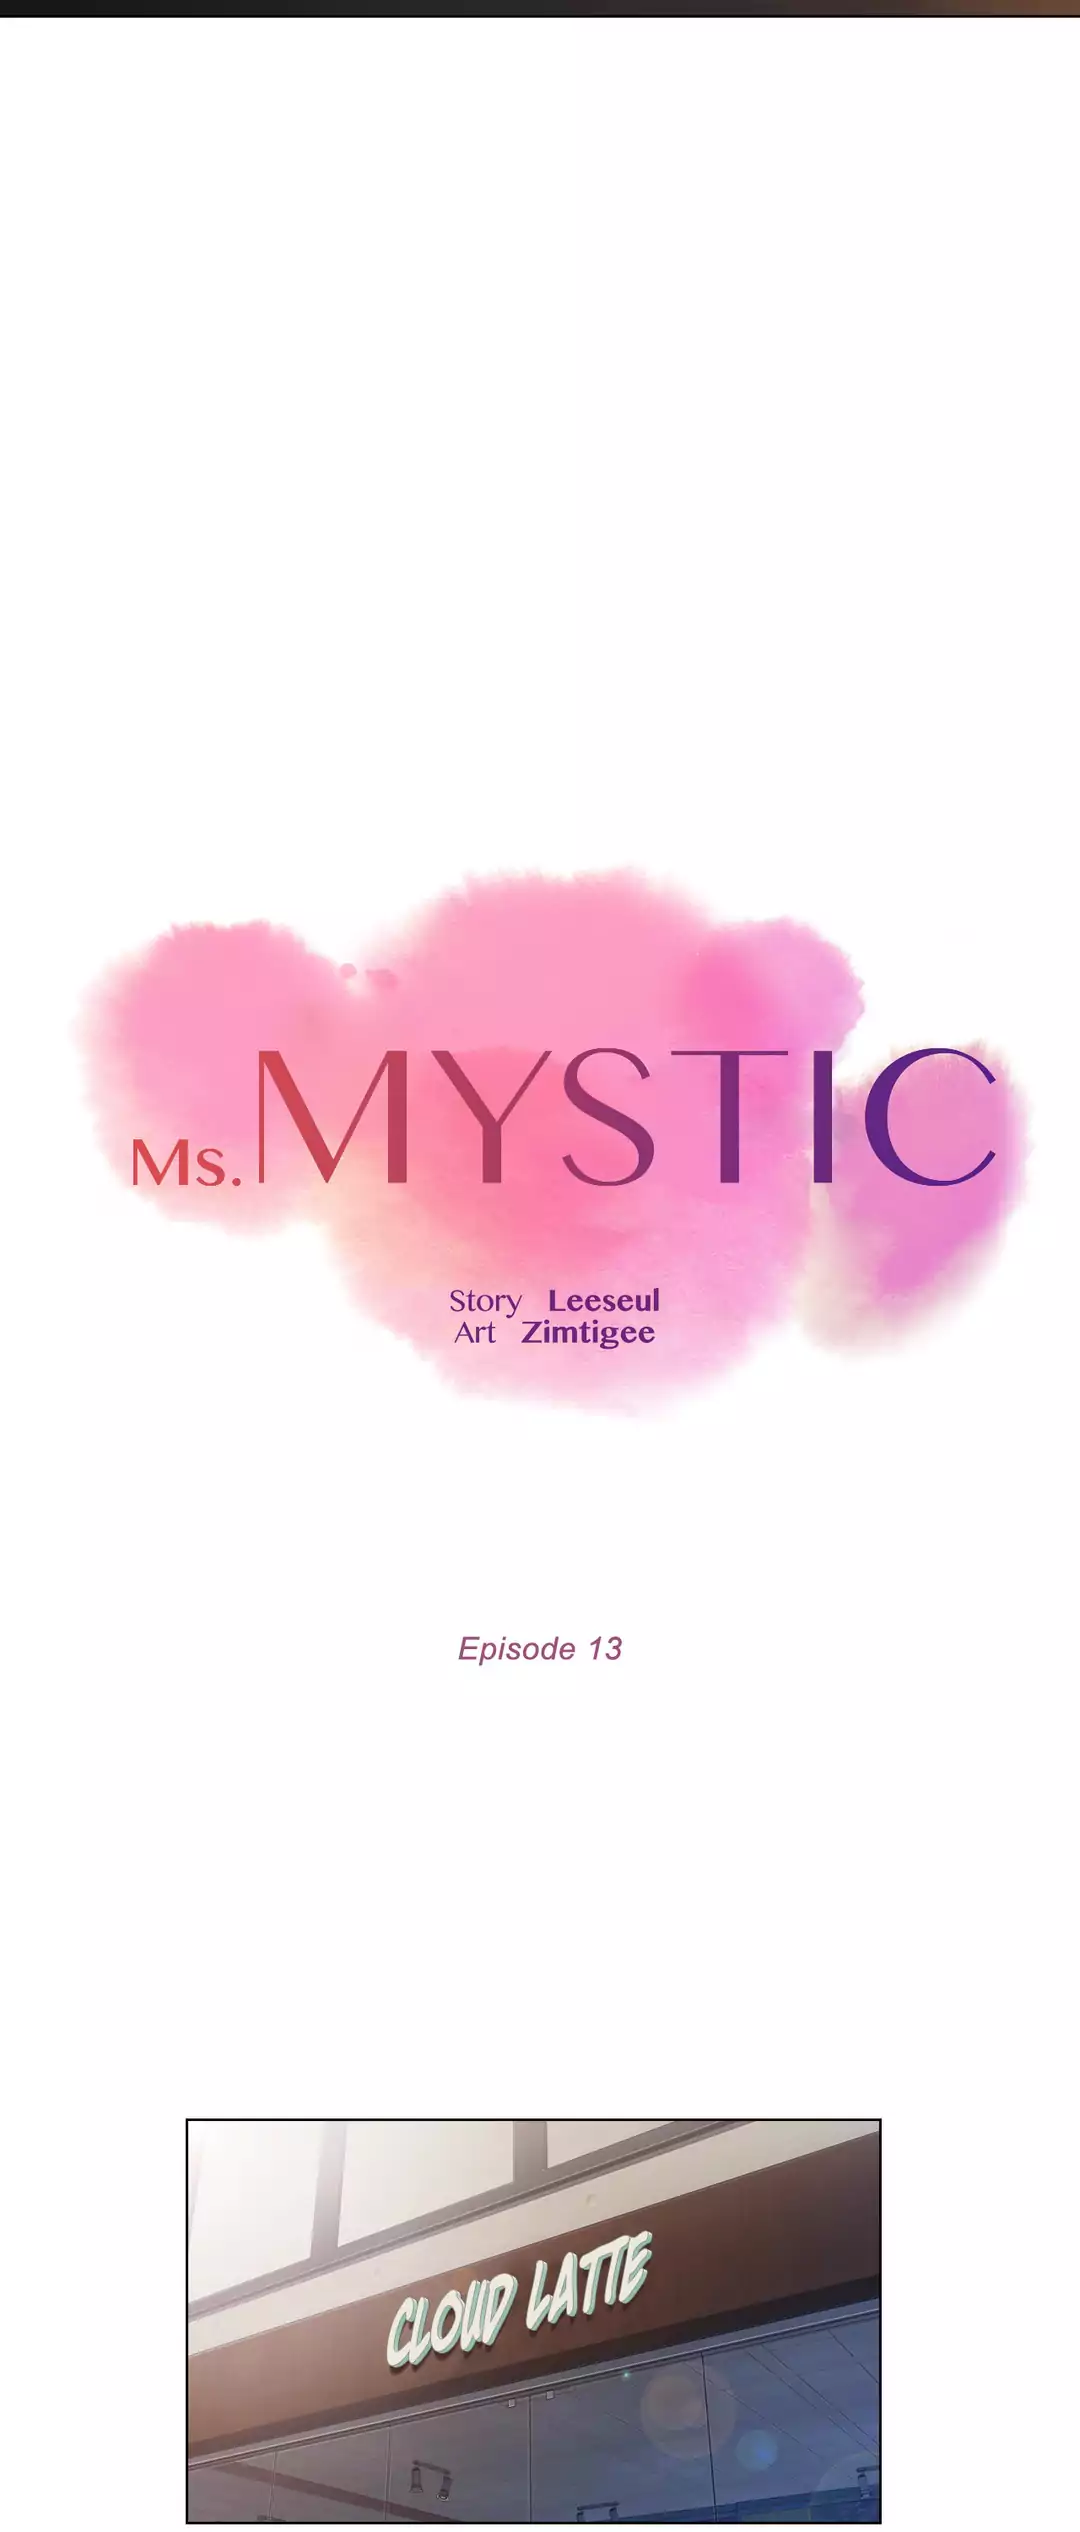 Miss Mystic image